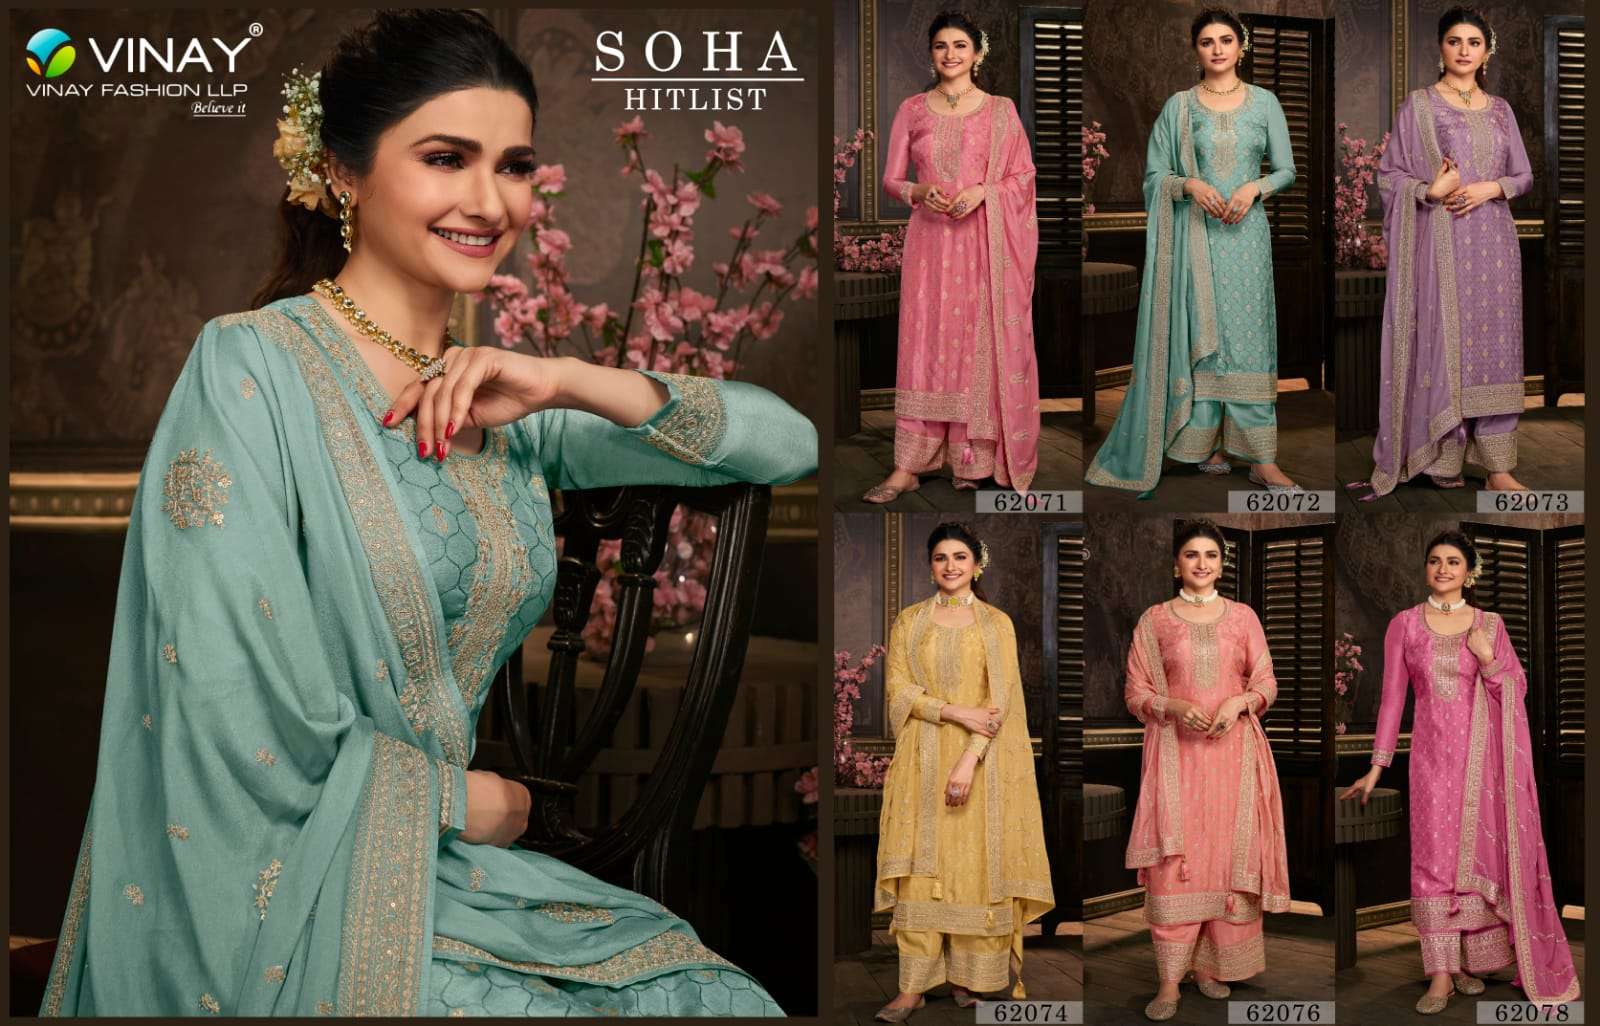 vinay fashion kaseesh soha hitlist latest designer party wear salwar suits new catalogue 